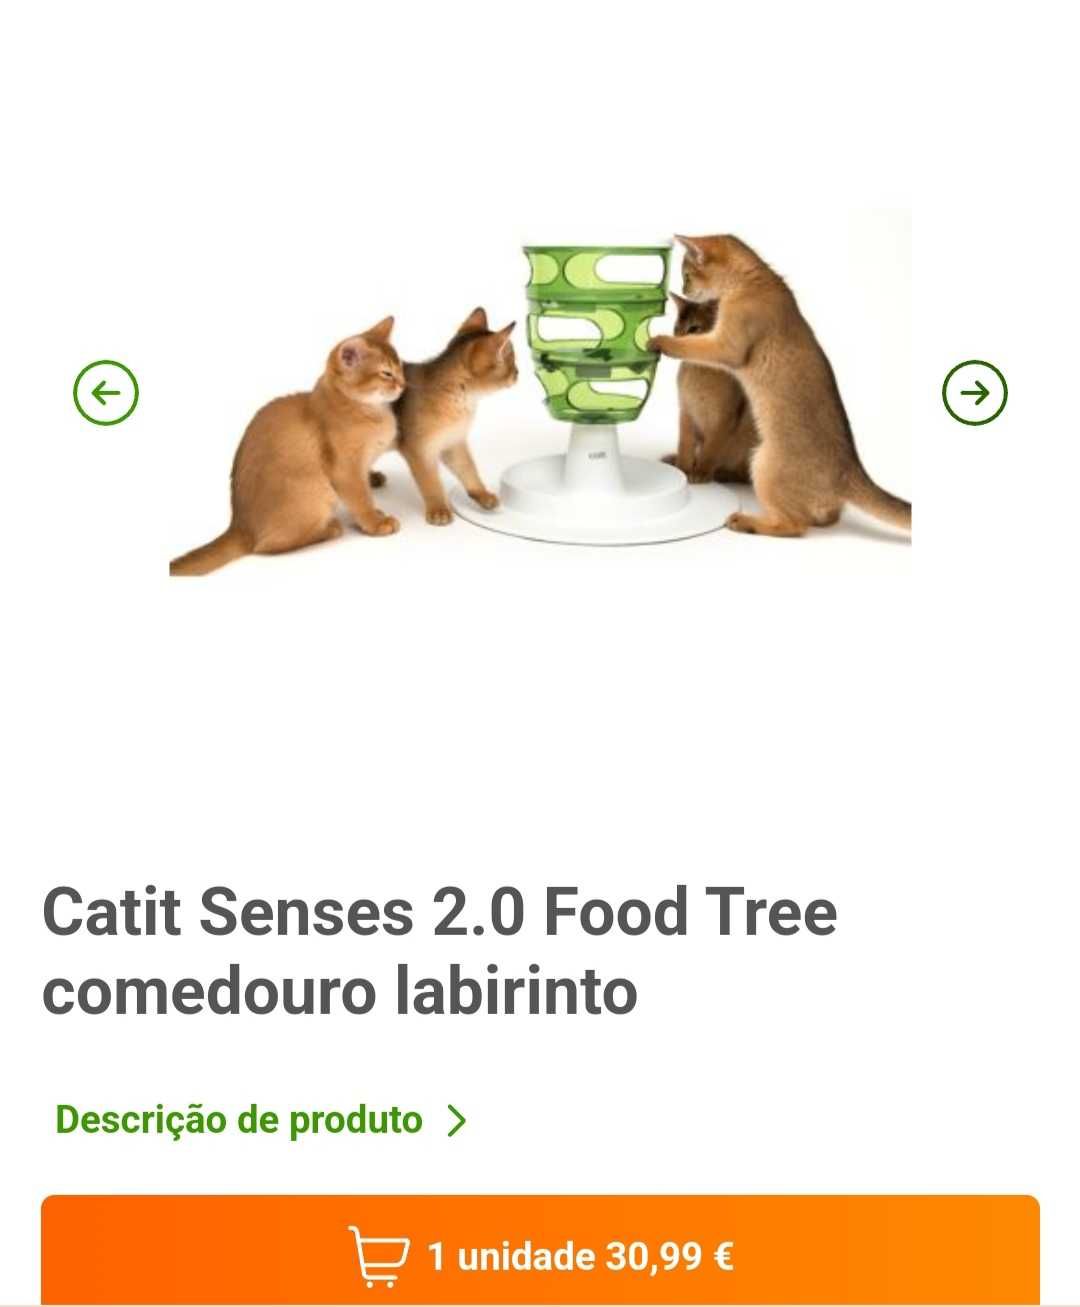 Catit Senses 2.0 Food Tree comedouro labirinto